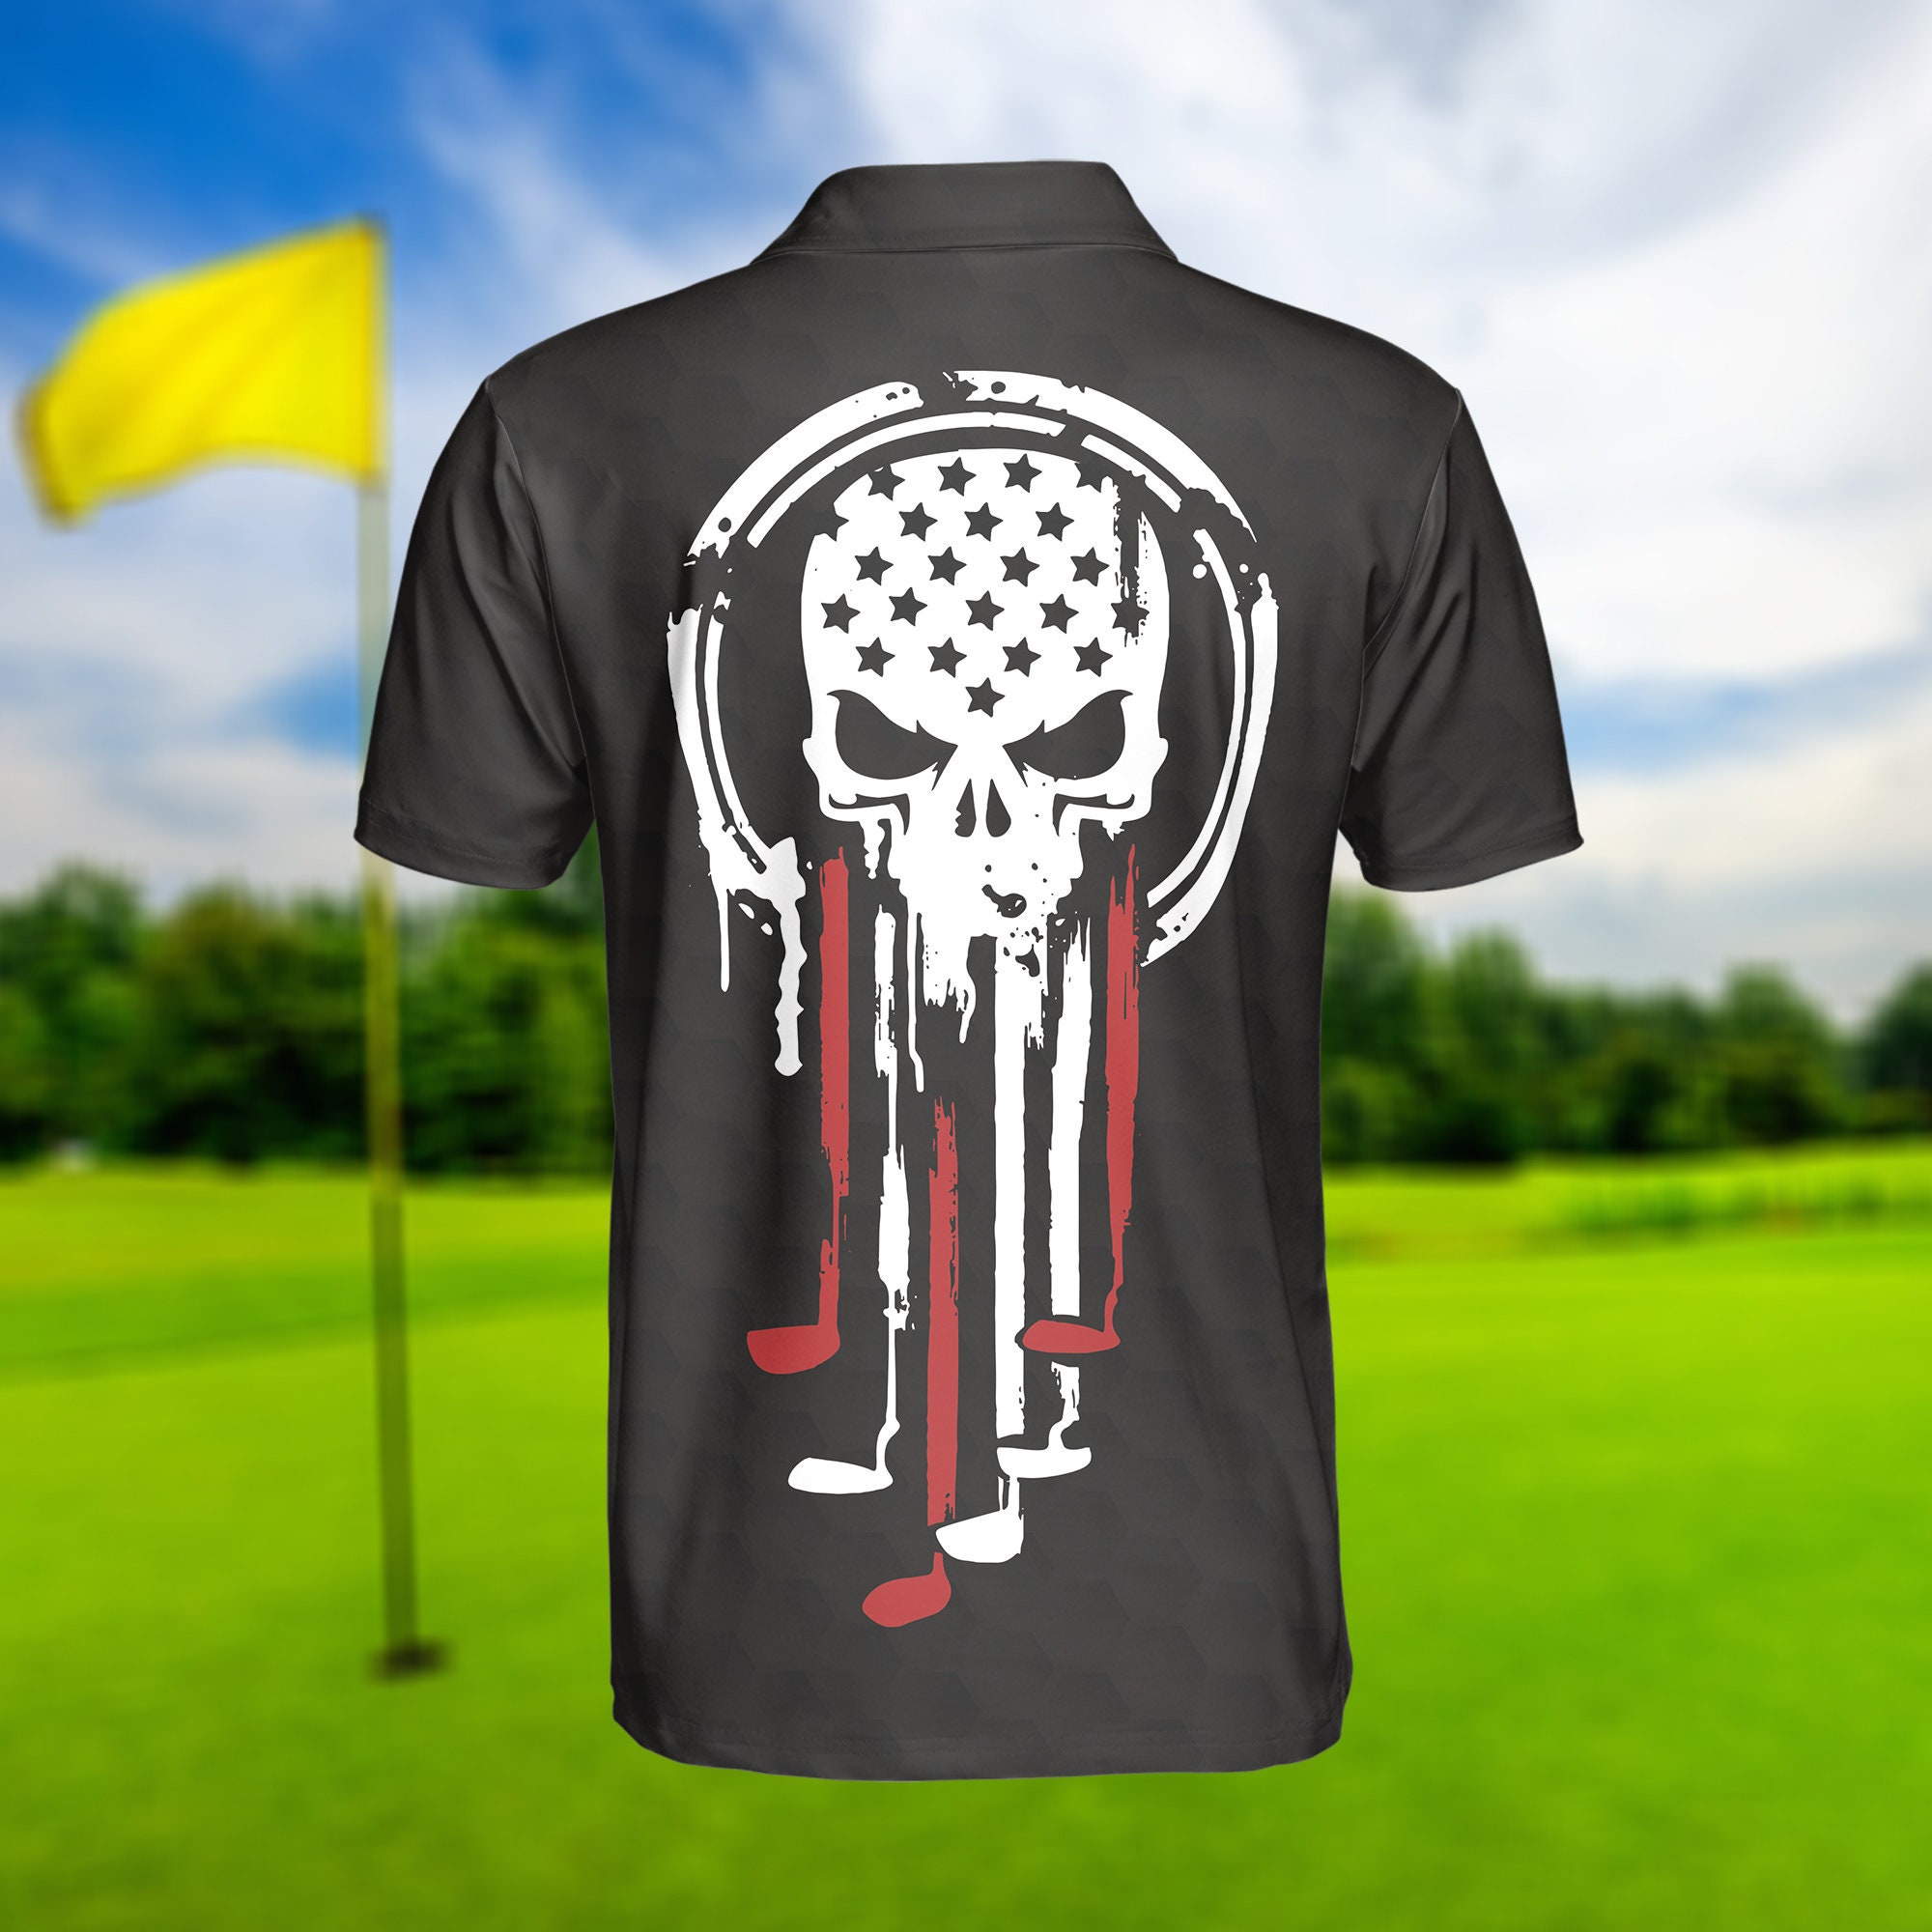 American Skull Golf Polo Shirt, American Flag Polo Shirt, Best Golf Shirt For Men